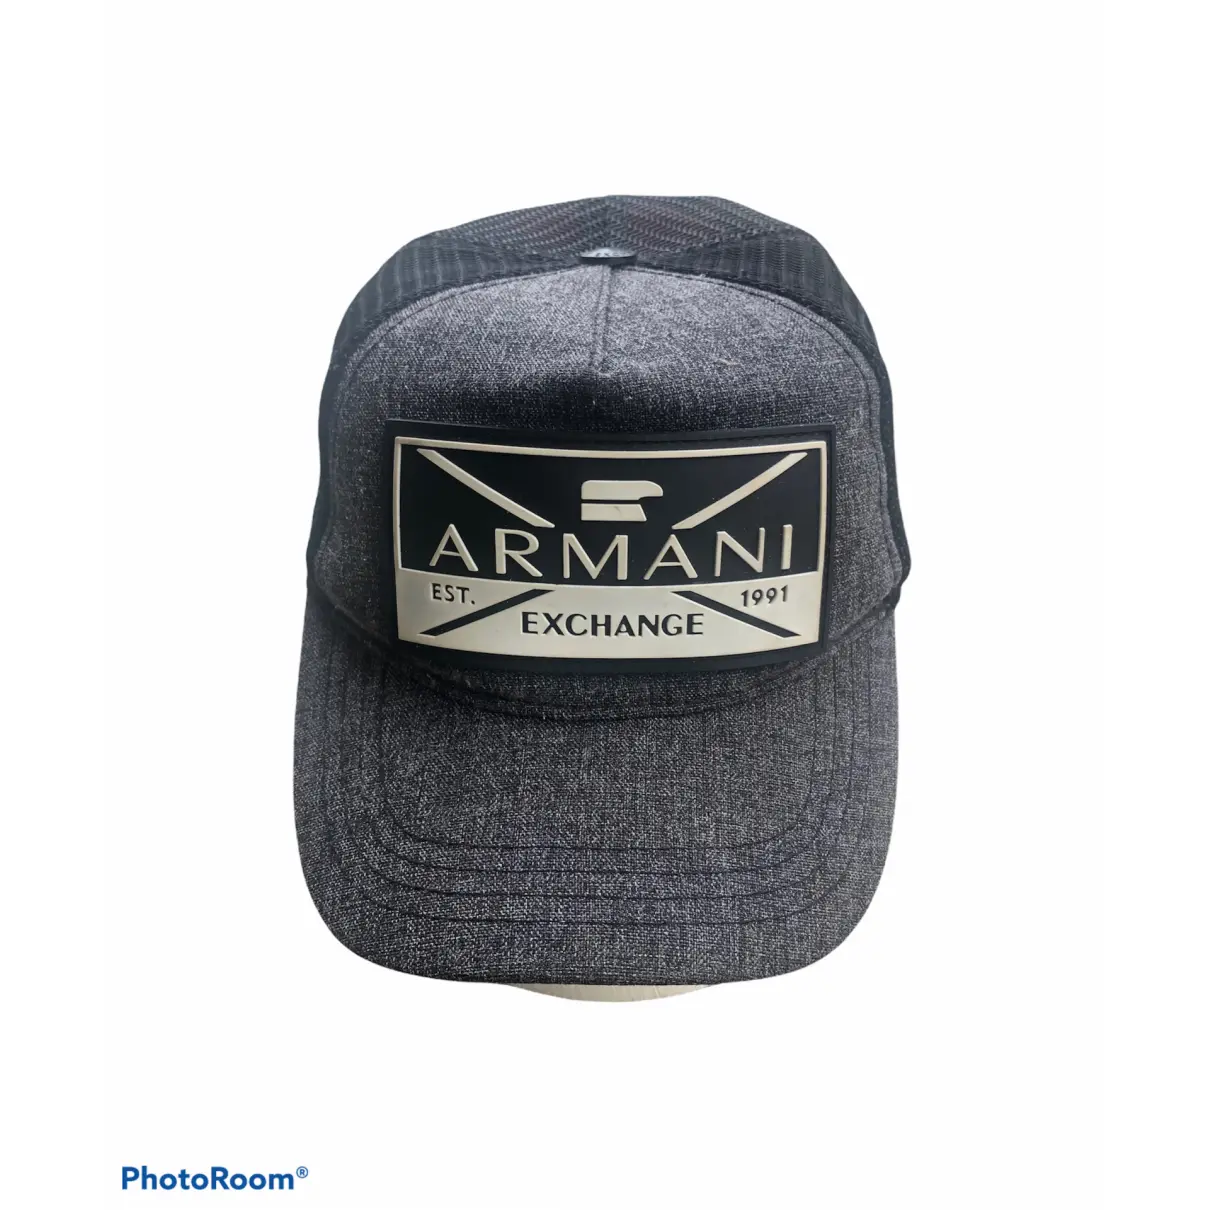 Buy Armani Exchange Hat online